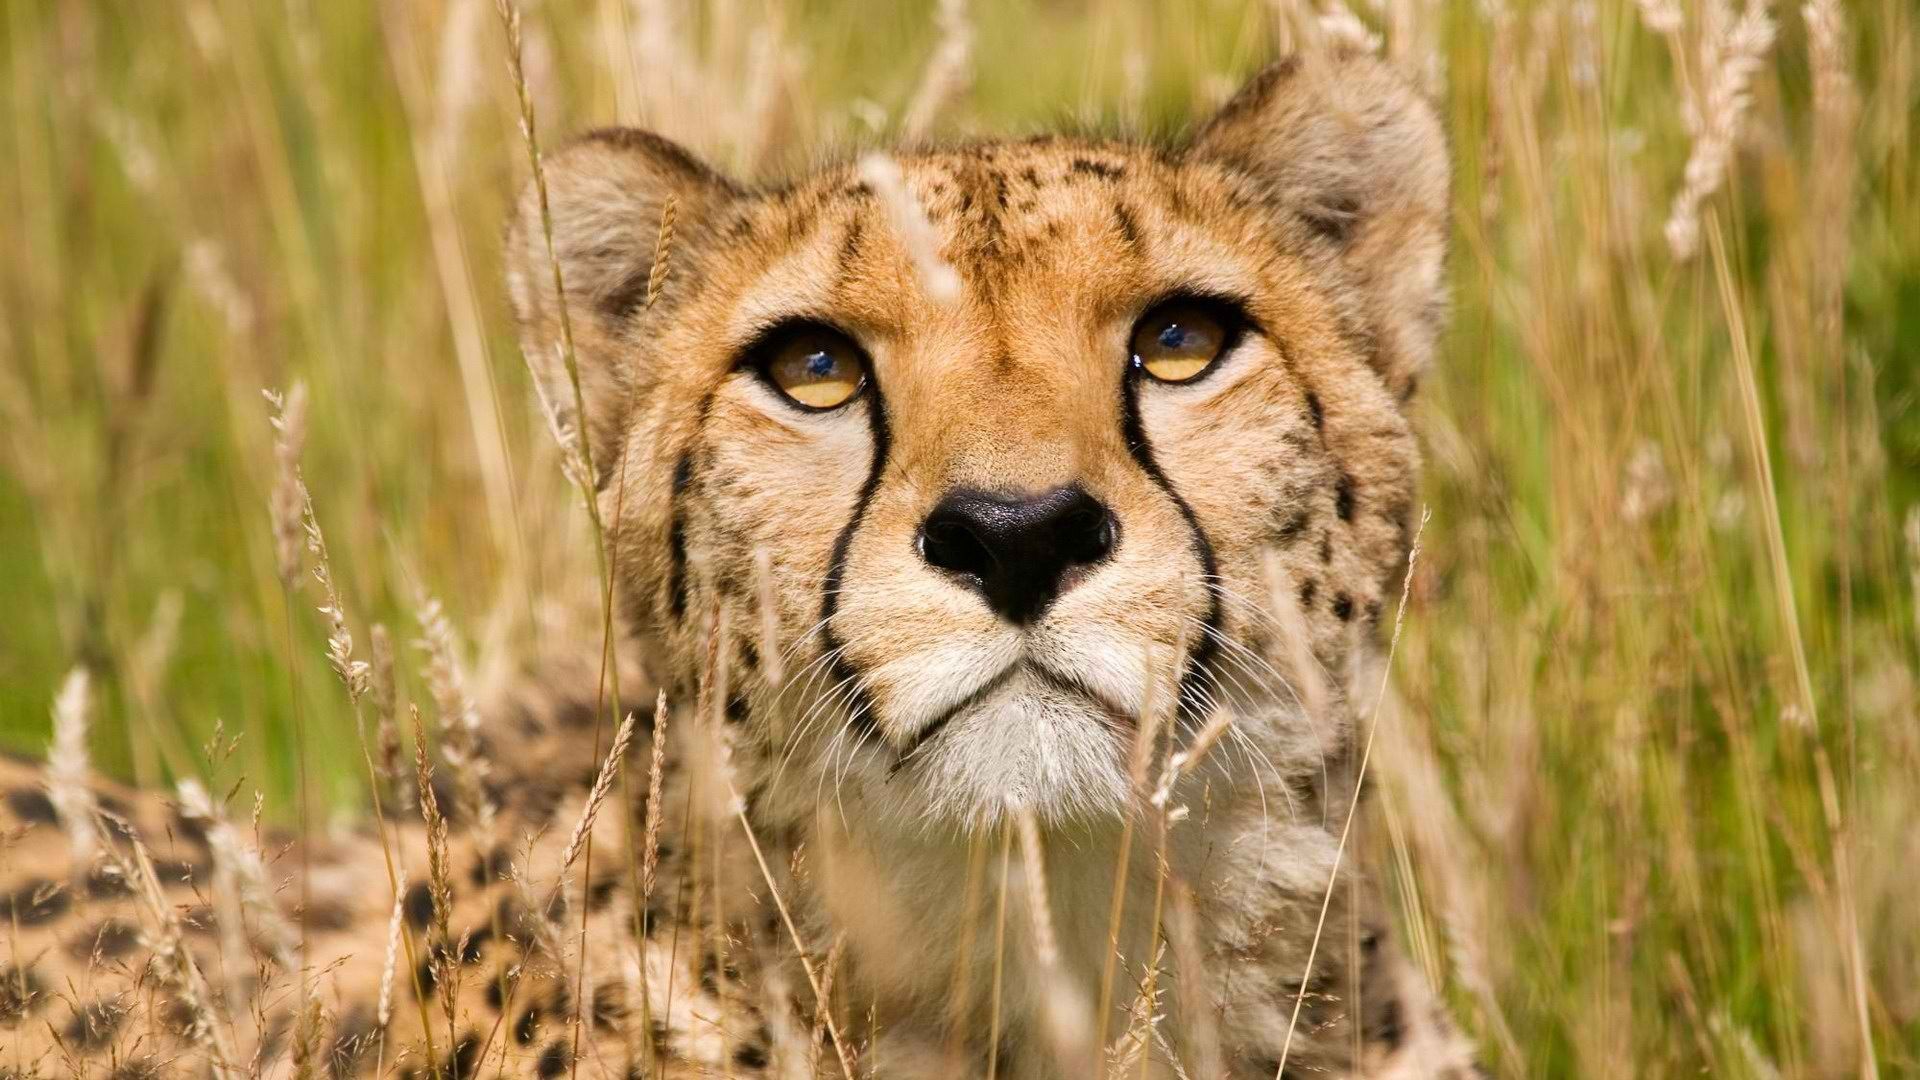 Cheetah HD Wallpaper